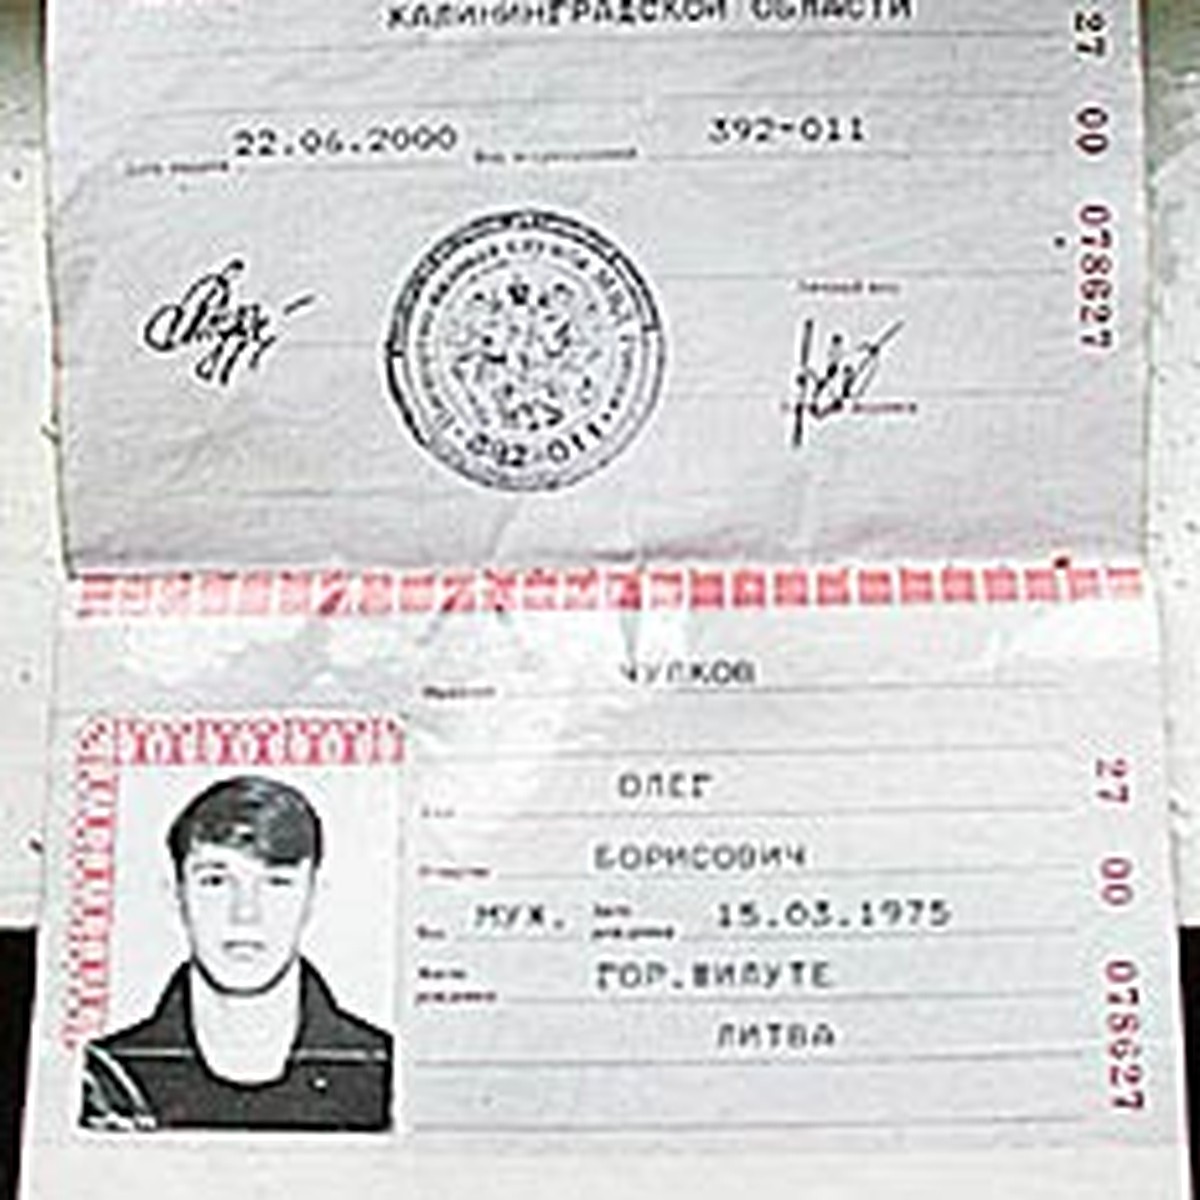 Фото паспорта 2002 года